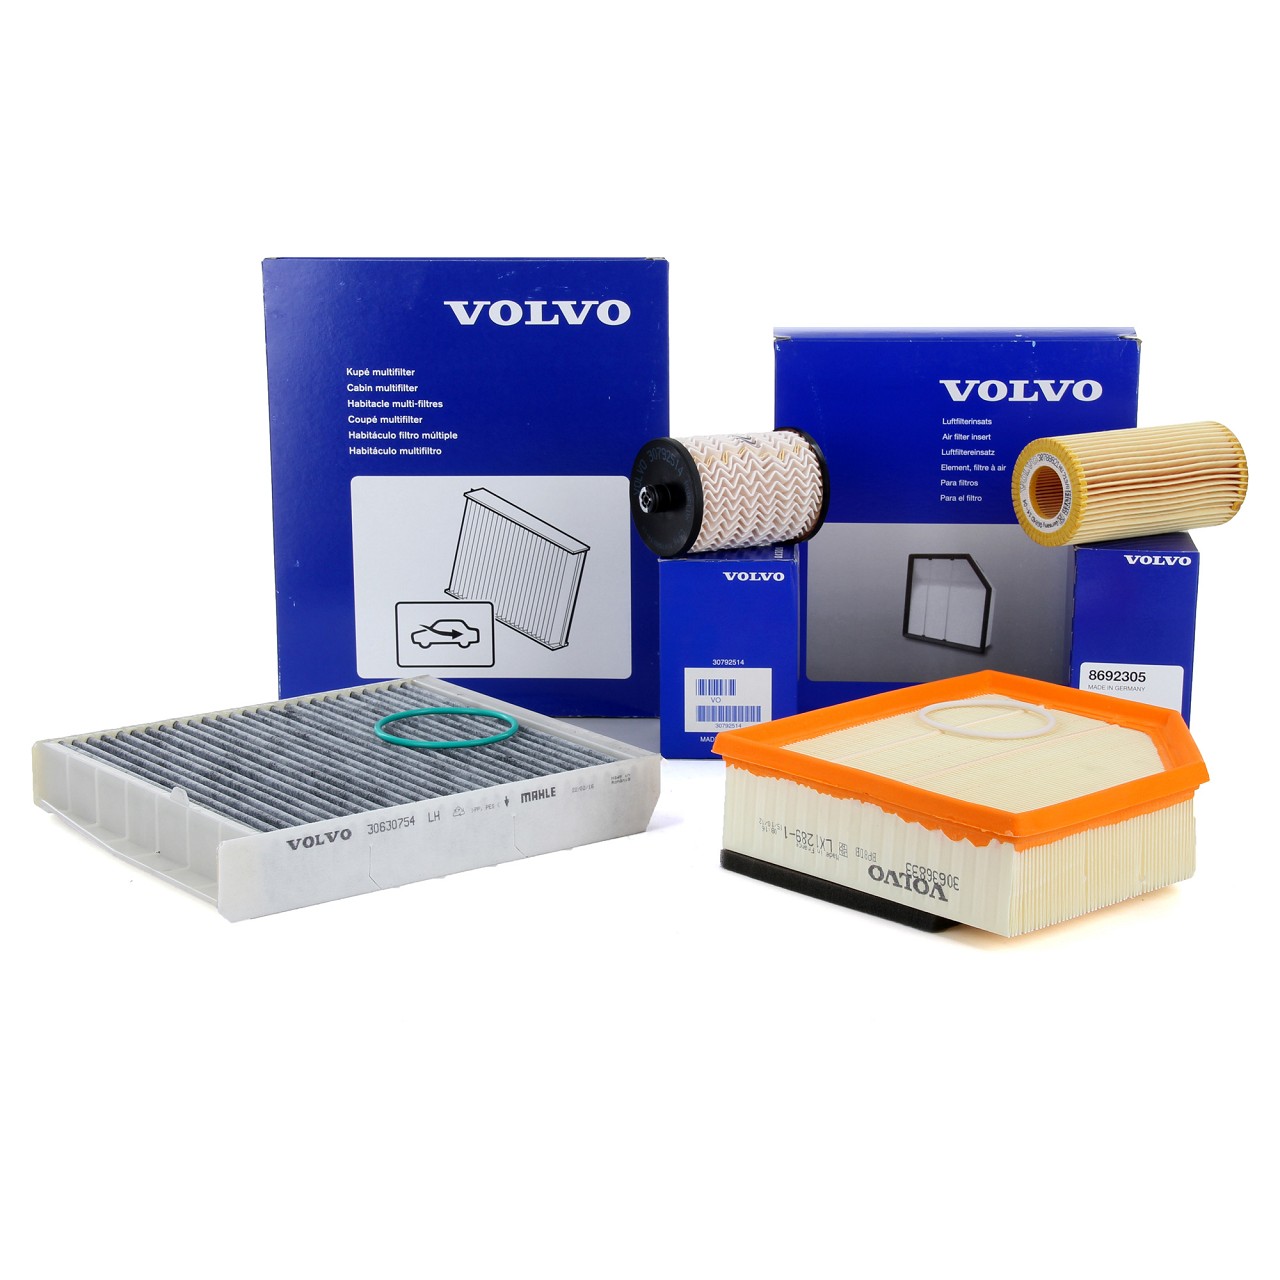 Volvo filter sets